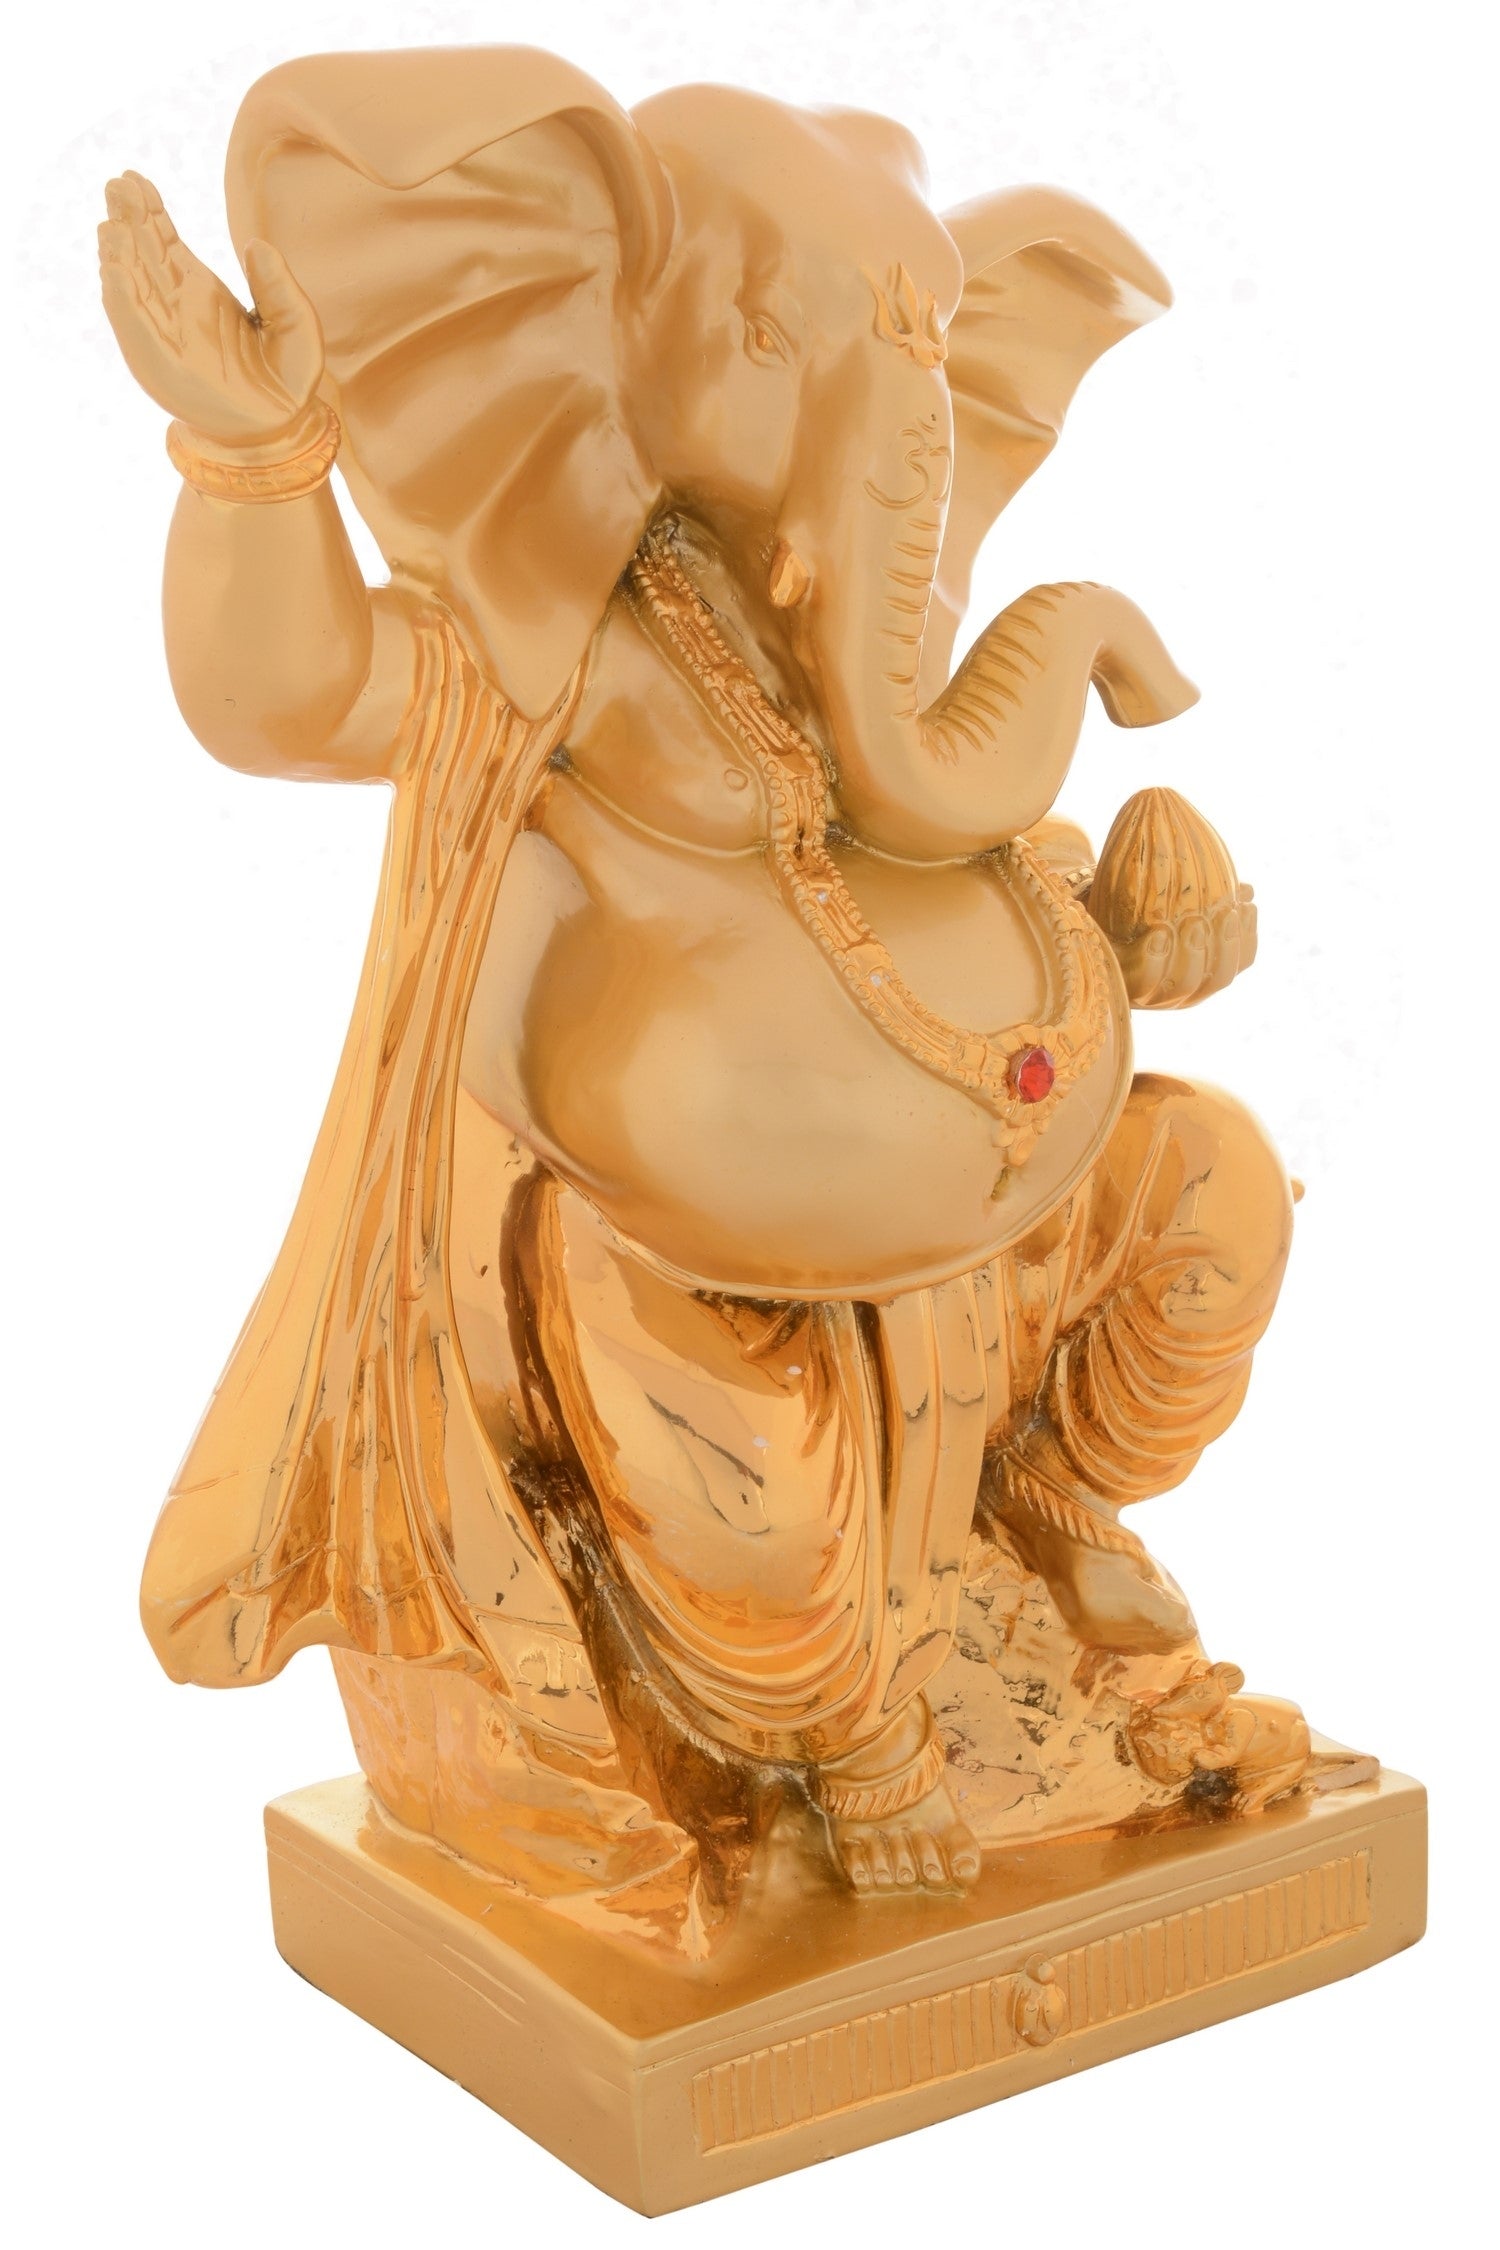 Premium Figurine of Lord Ganesha in Dancing Position 2